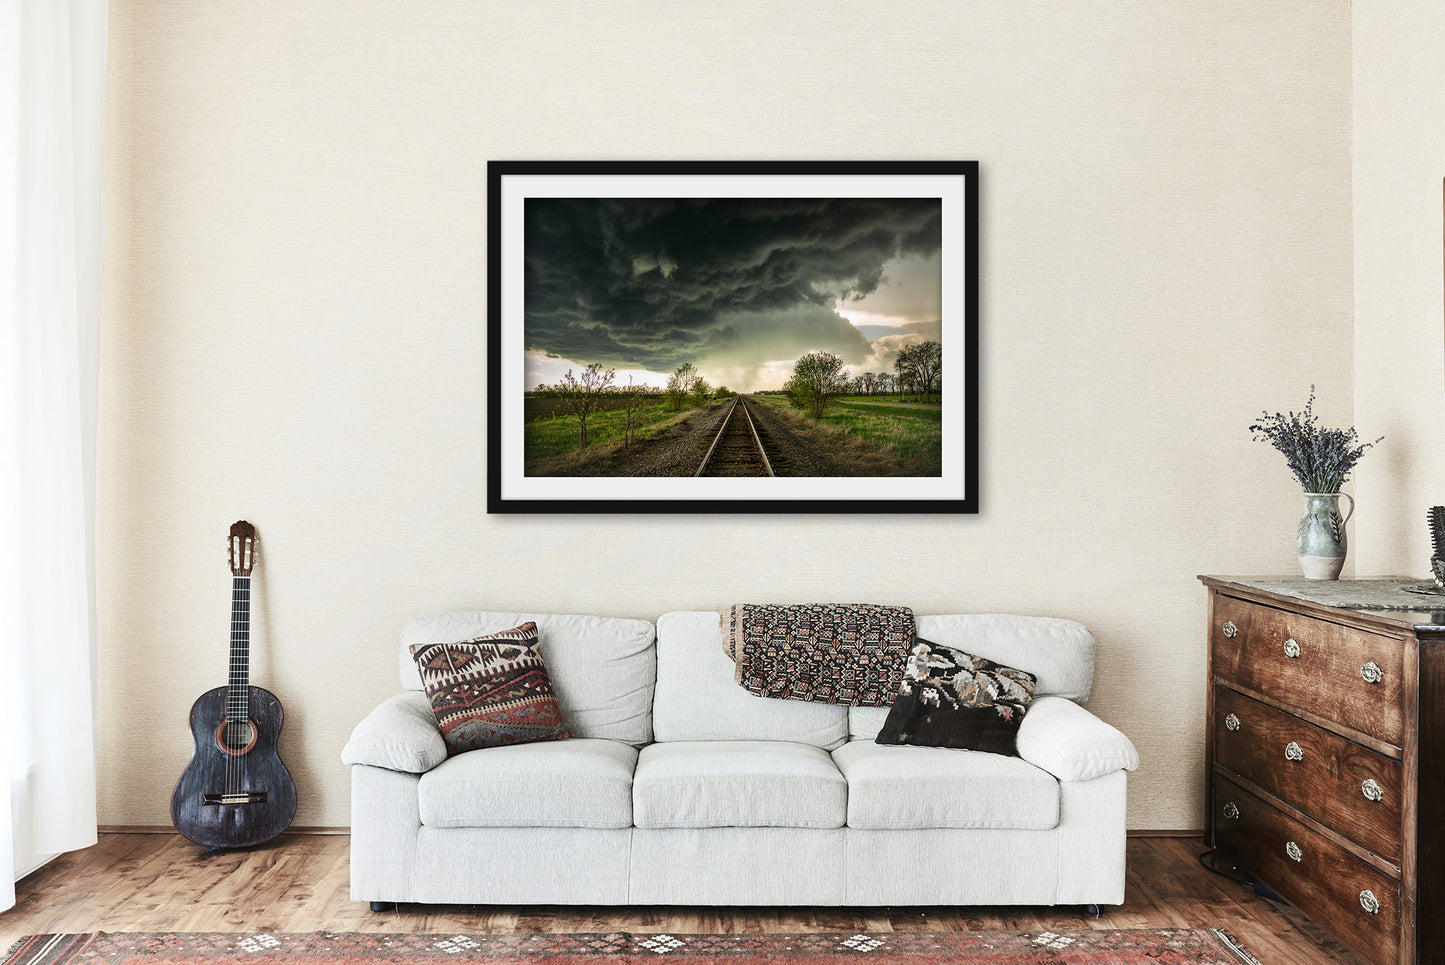 Storm Framed and Matted Print | Thunderstorm Photo | Train Tracks Decor | Kansas Photography | Railroad Wall Art | Ready to Hang